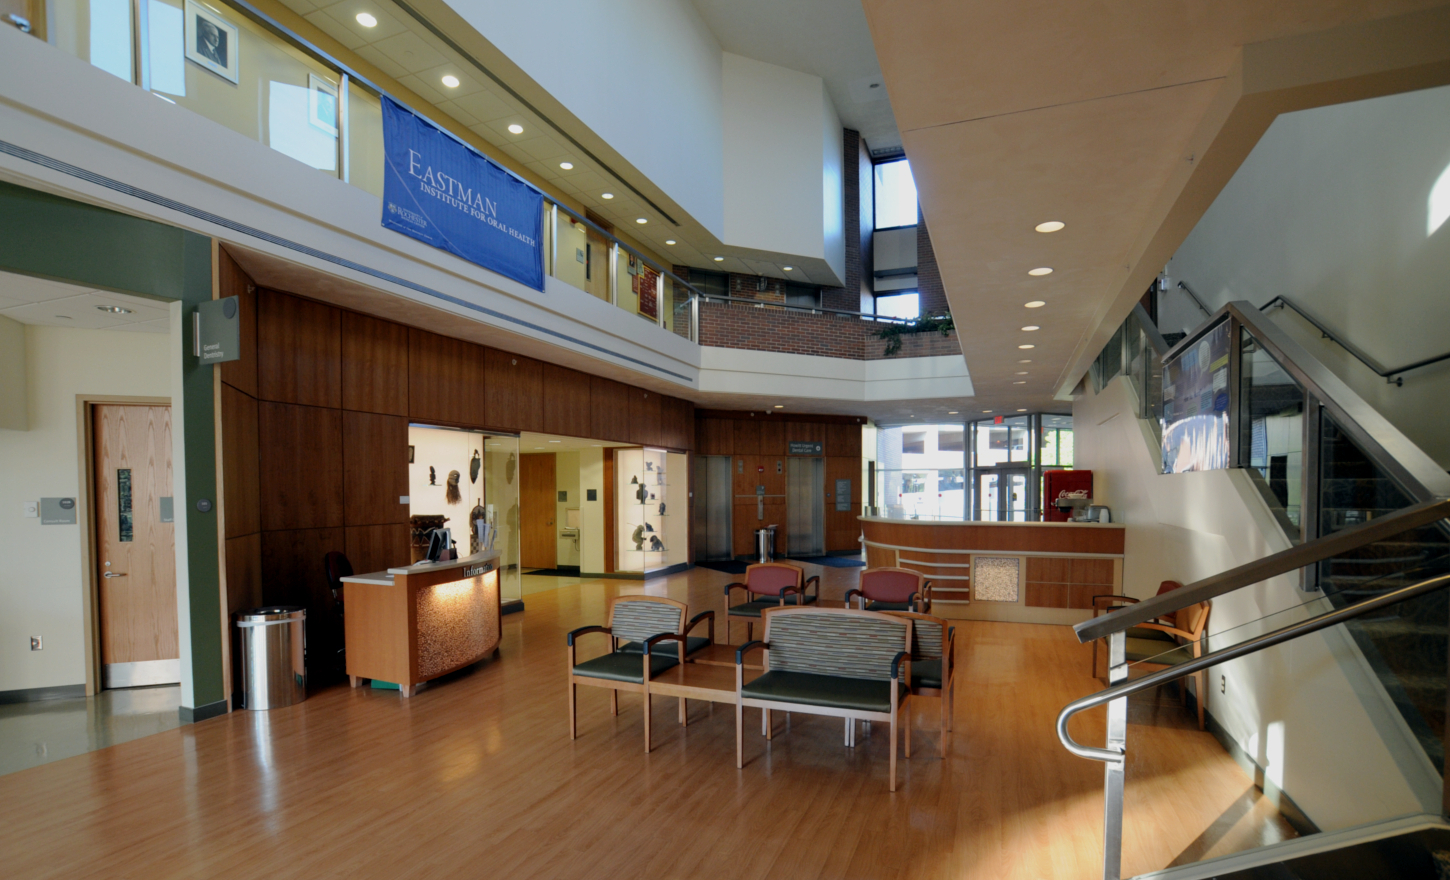 University of Rochester Medical Center Eastman Institute of Oral Health Atrium Renovation